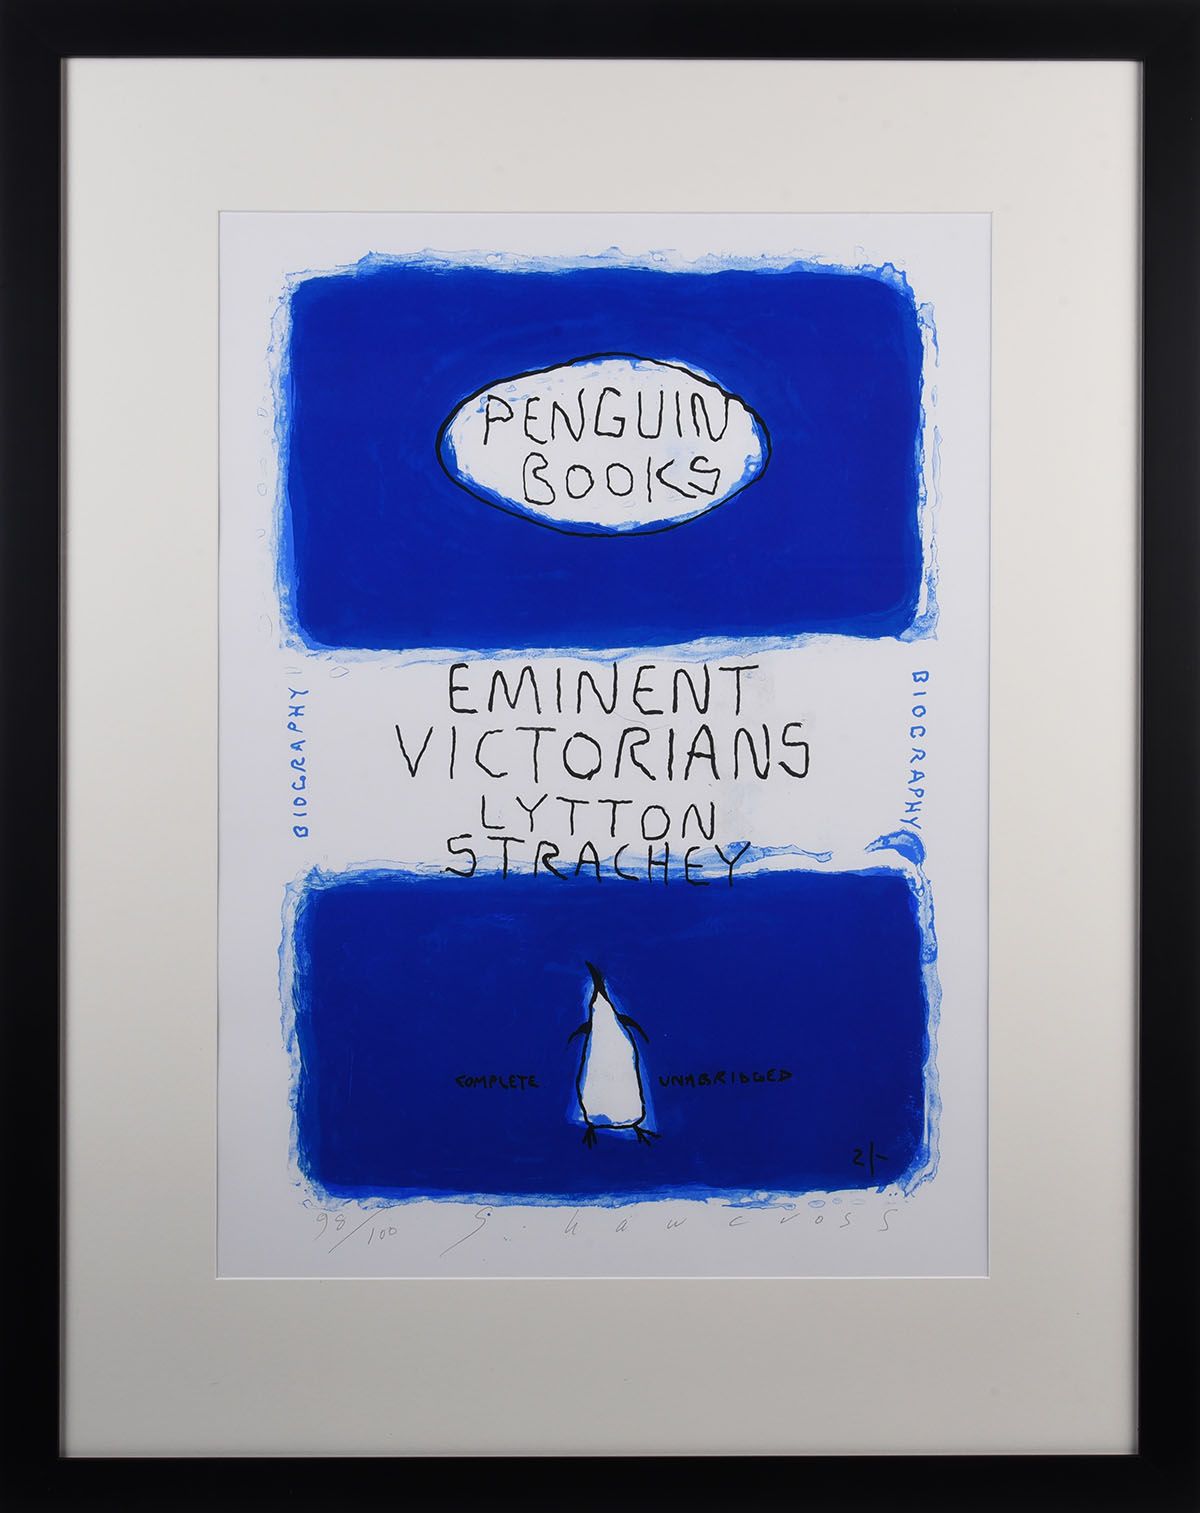 EMINENT VICTORIANS BY LYTTON STRACHEY (PENGUIN BOOK SERIES) by Neil Shawcross RHA RUA at Ross's Online Art Auctions